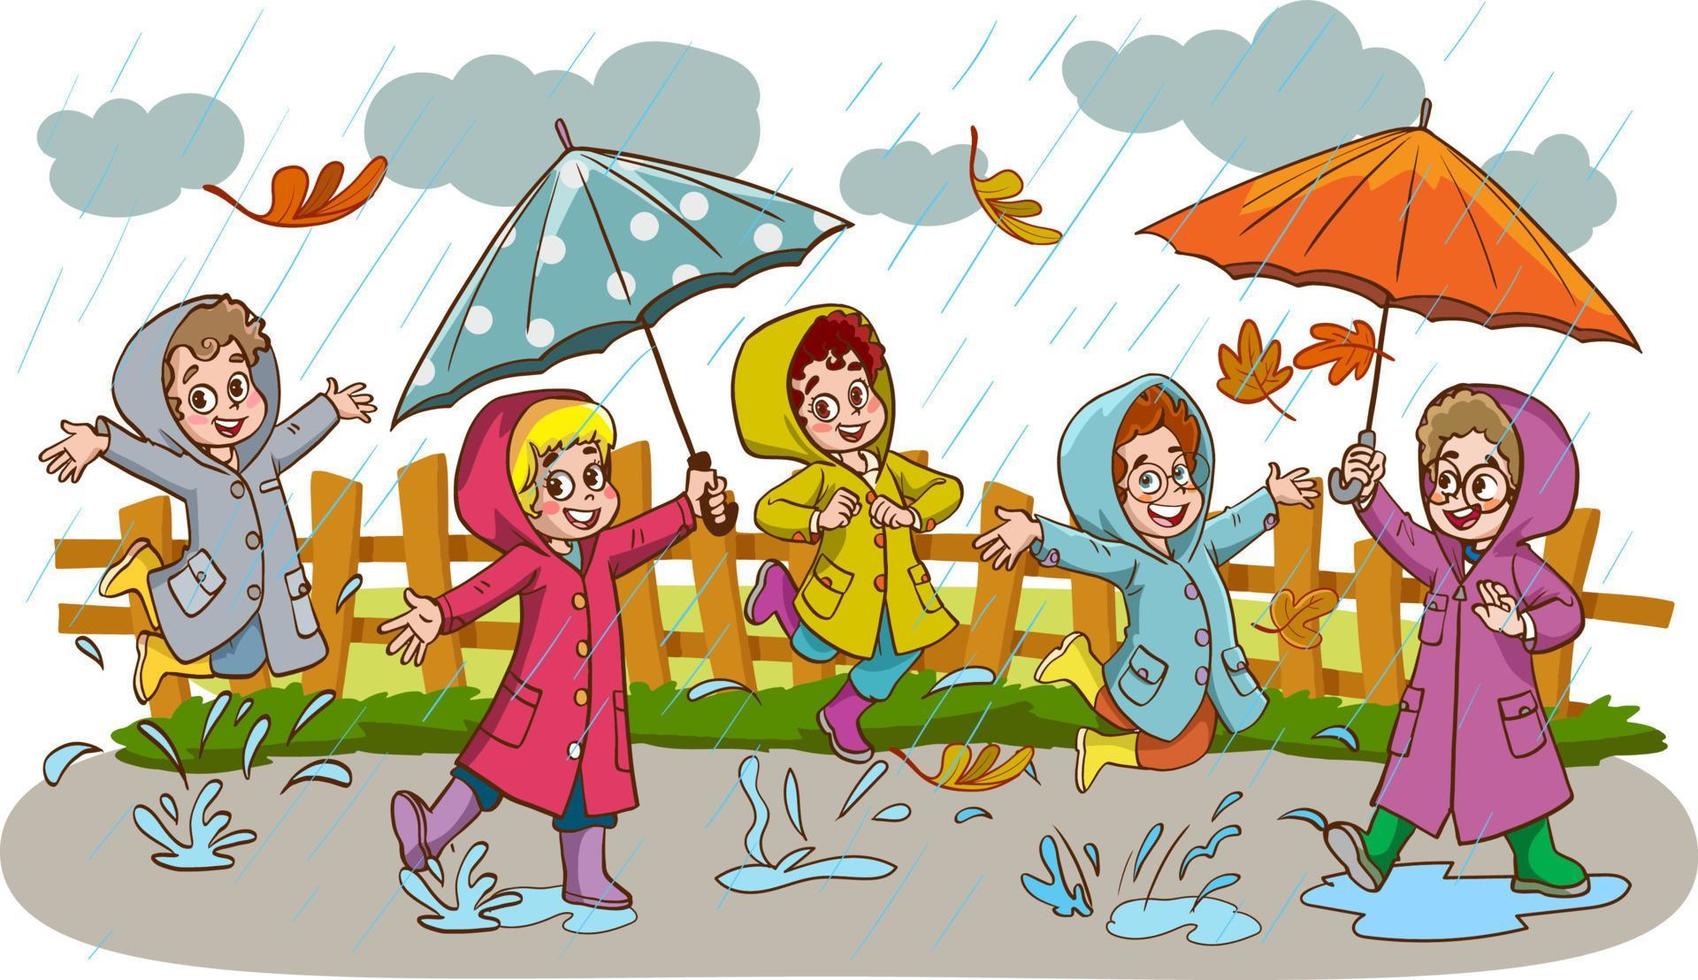 leende liten barn Hoppar i en pöl i regnig dag vektor illustration